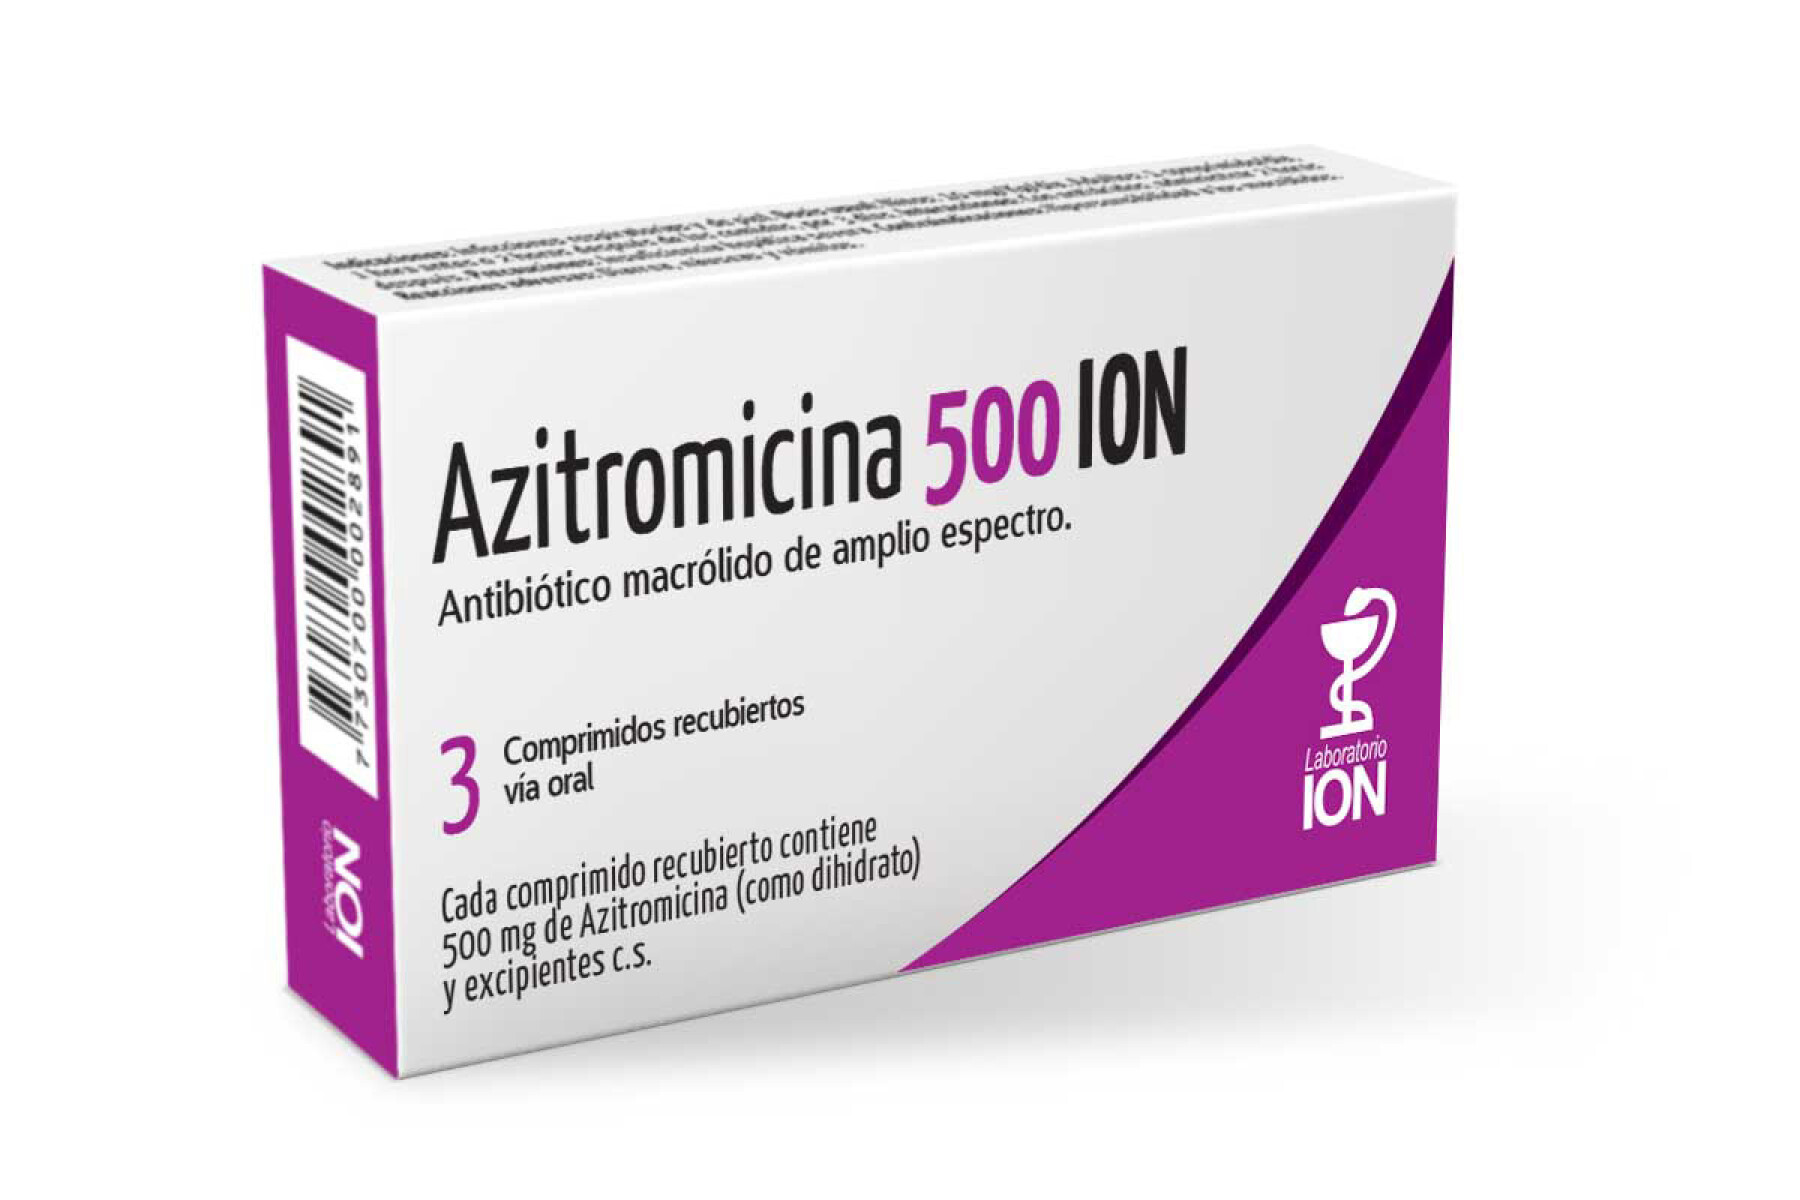 Azitromicina 500Mg Ion 